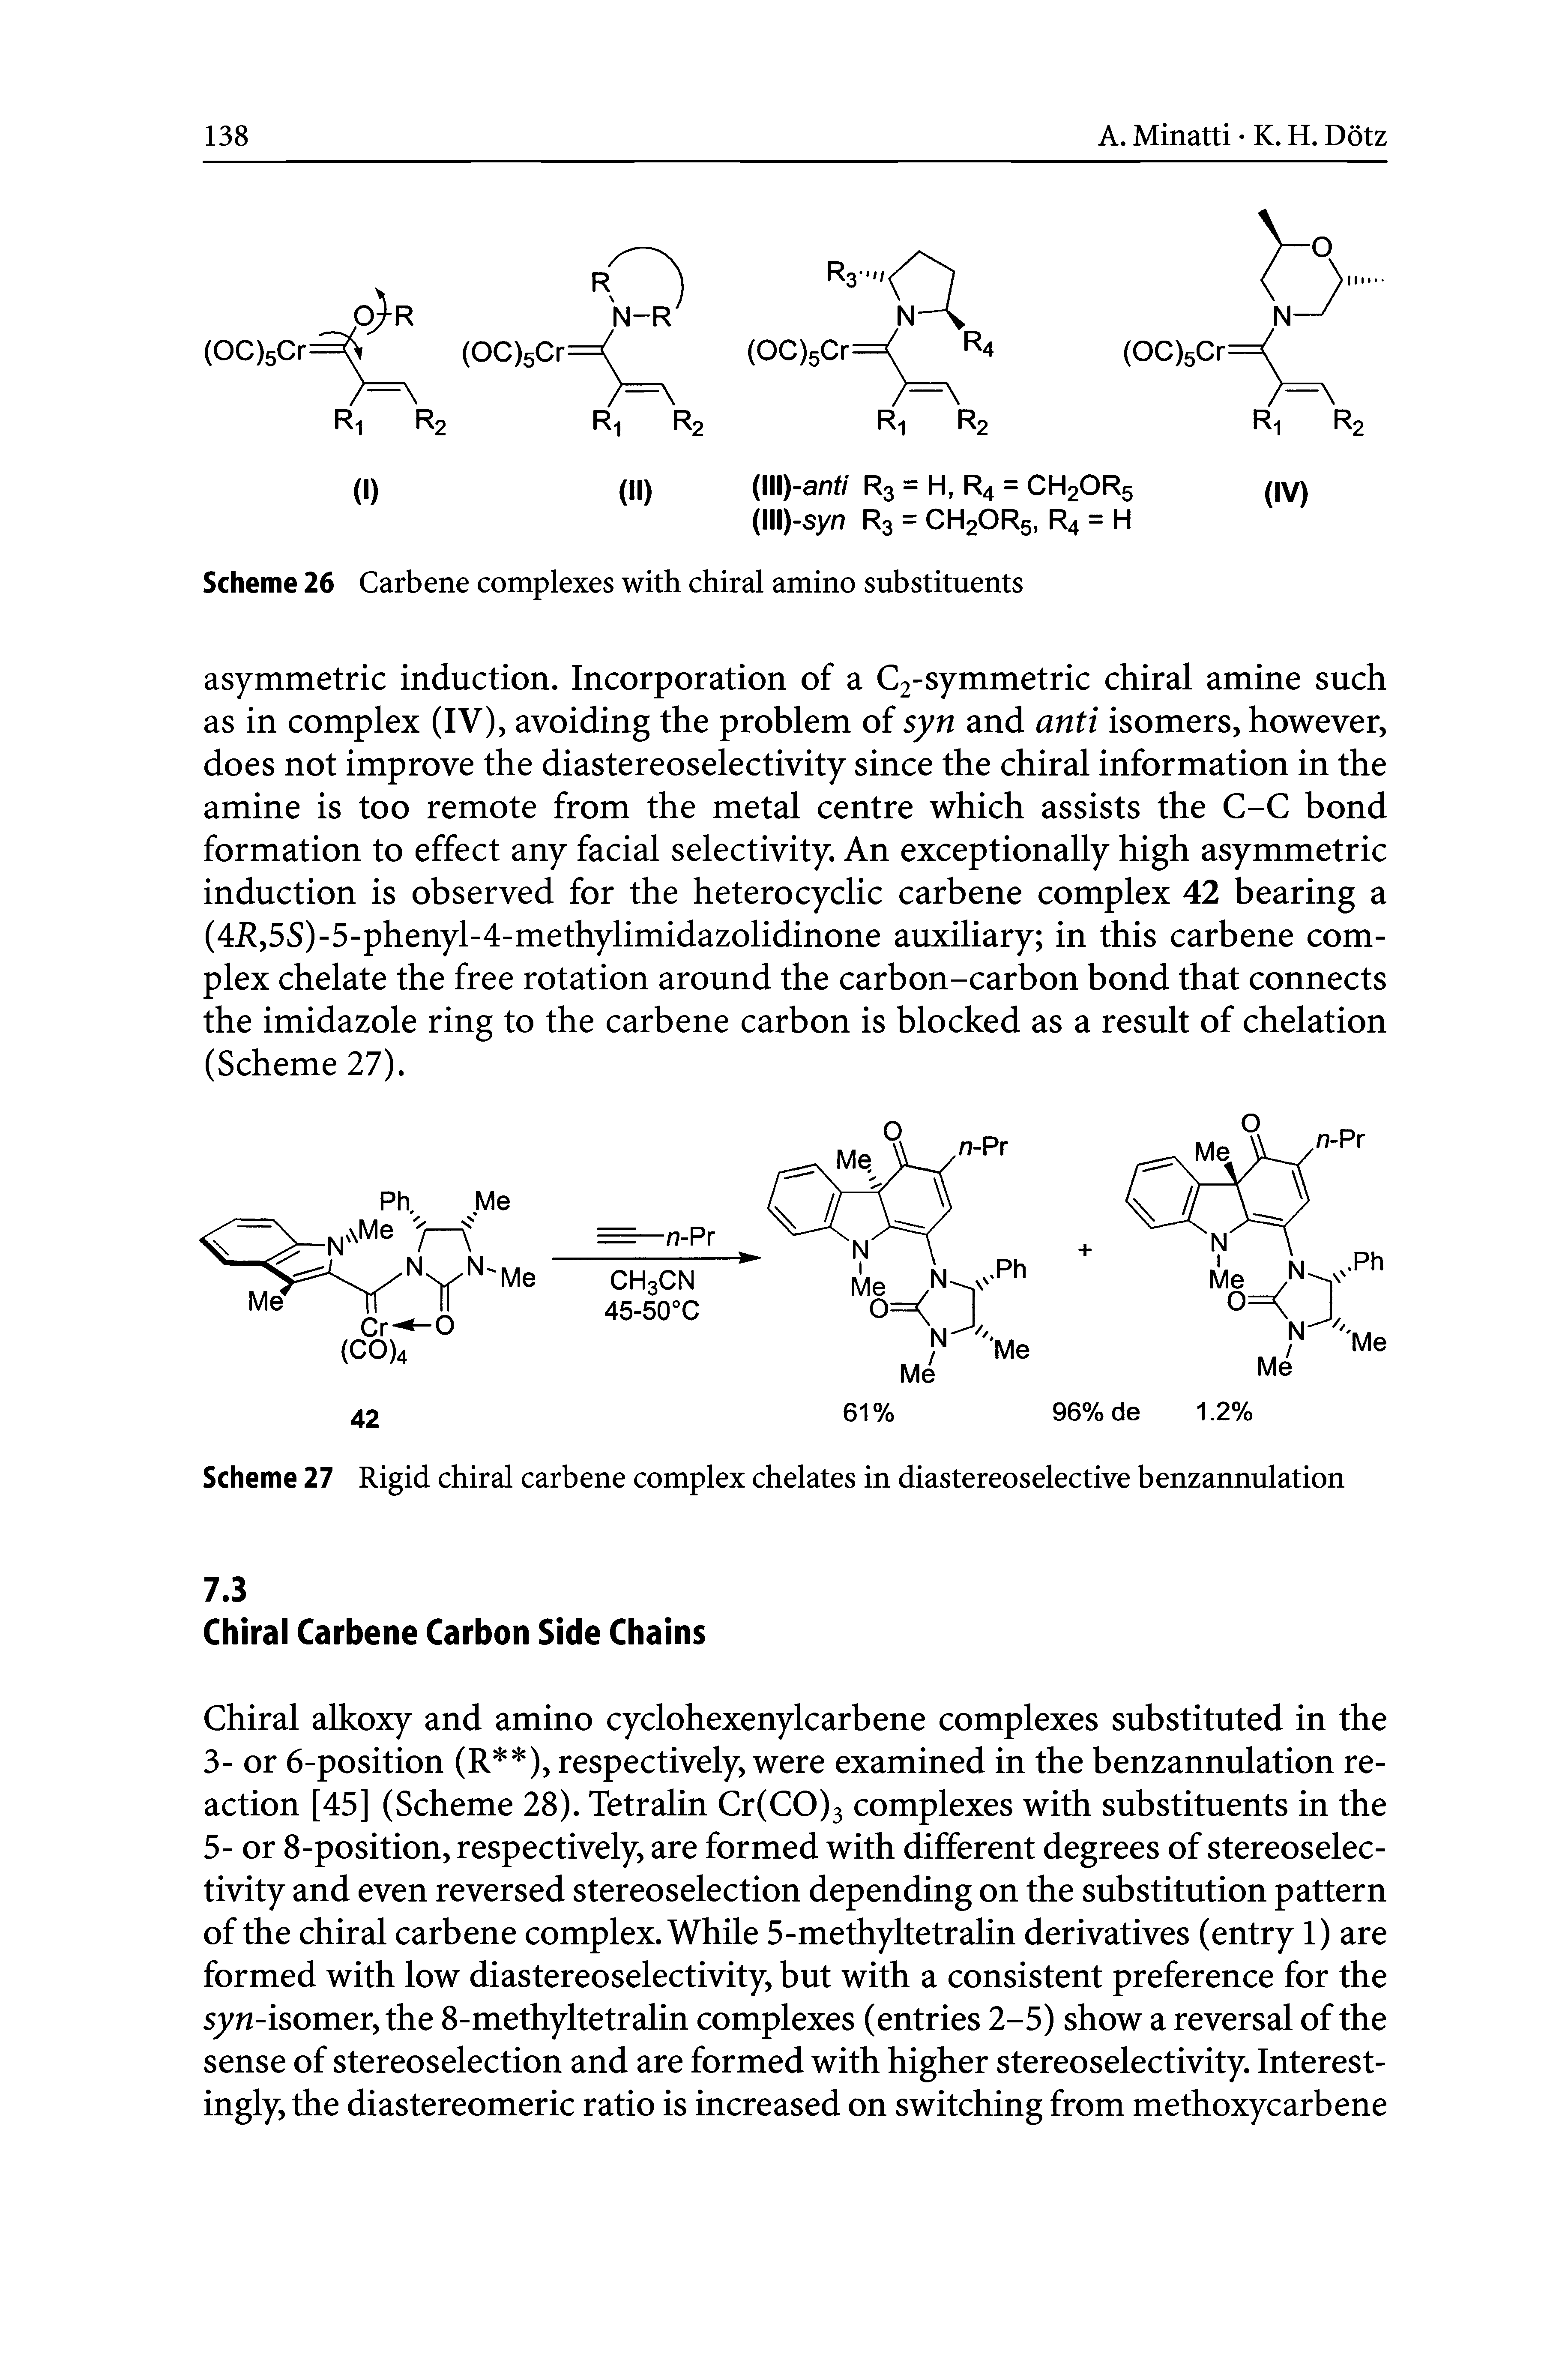 Scheme 27 Rigid chiral carbene complex chelates in diastereoselective benzannulation...